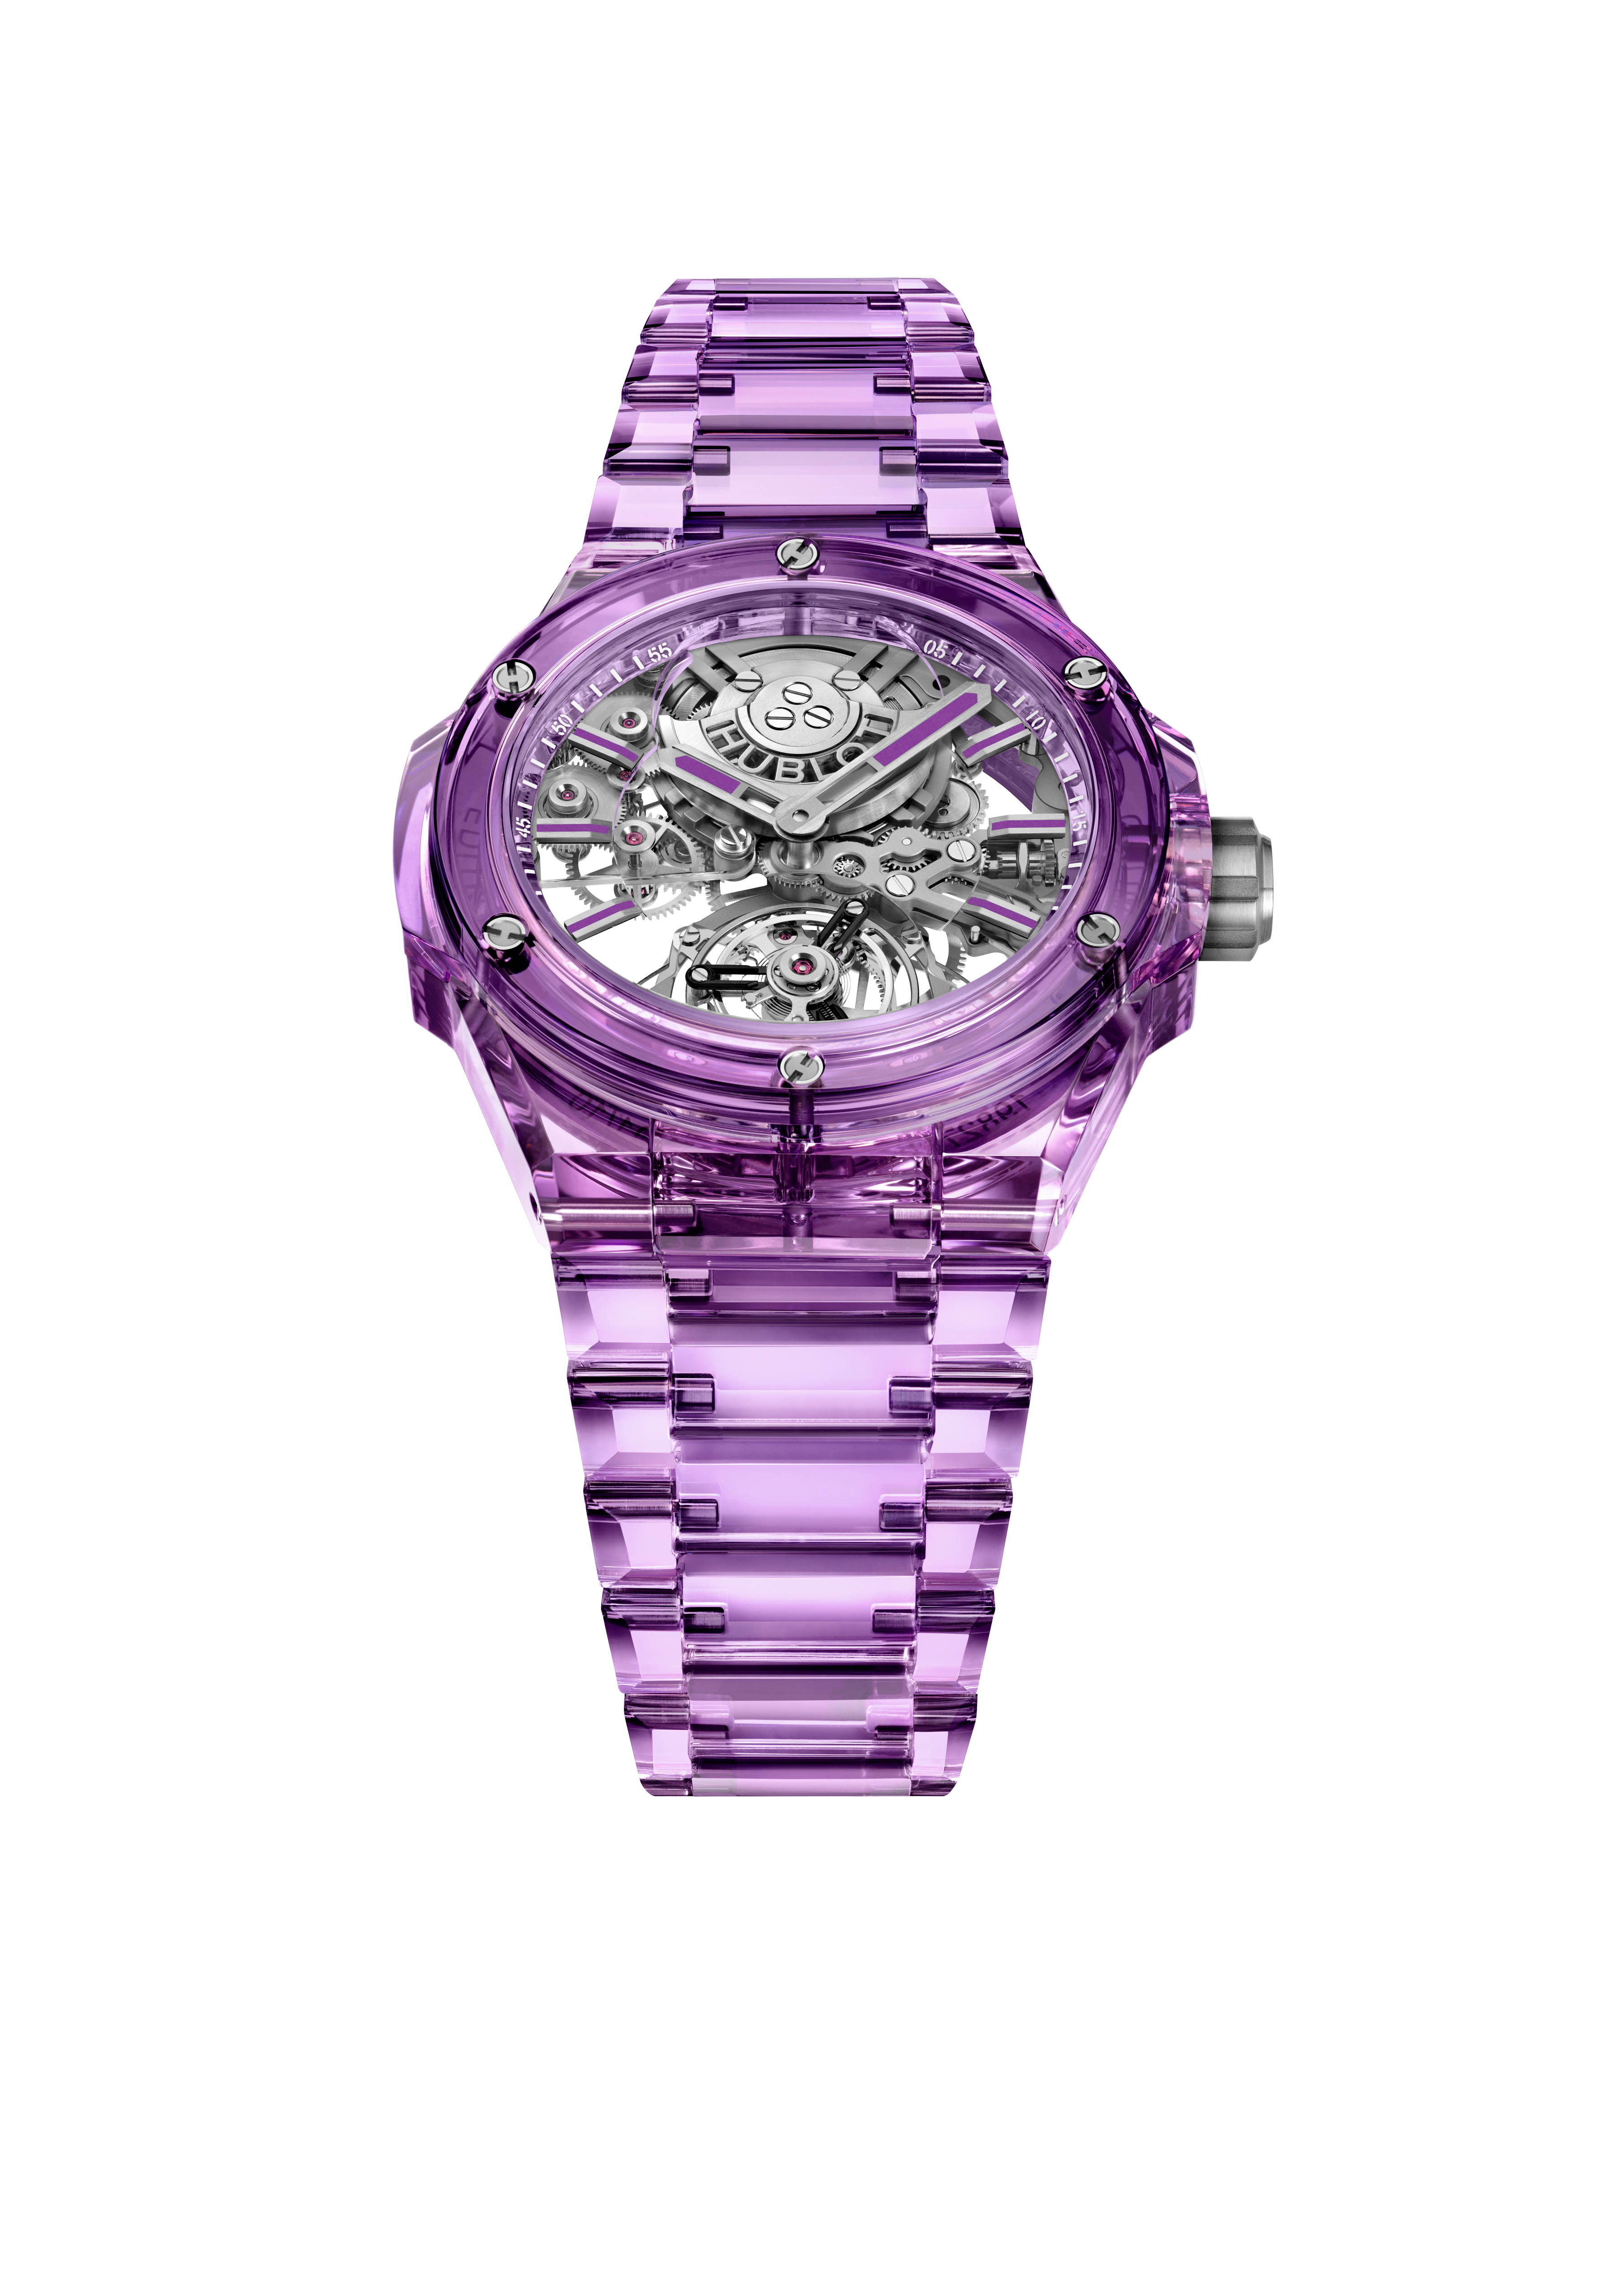 Big Bang Integrated紫色藍寶石陀飛輪鍊帶腕錶。圖／宇舶錶提供